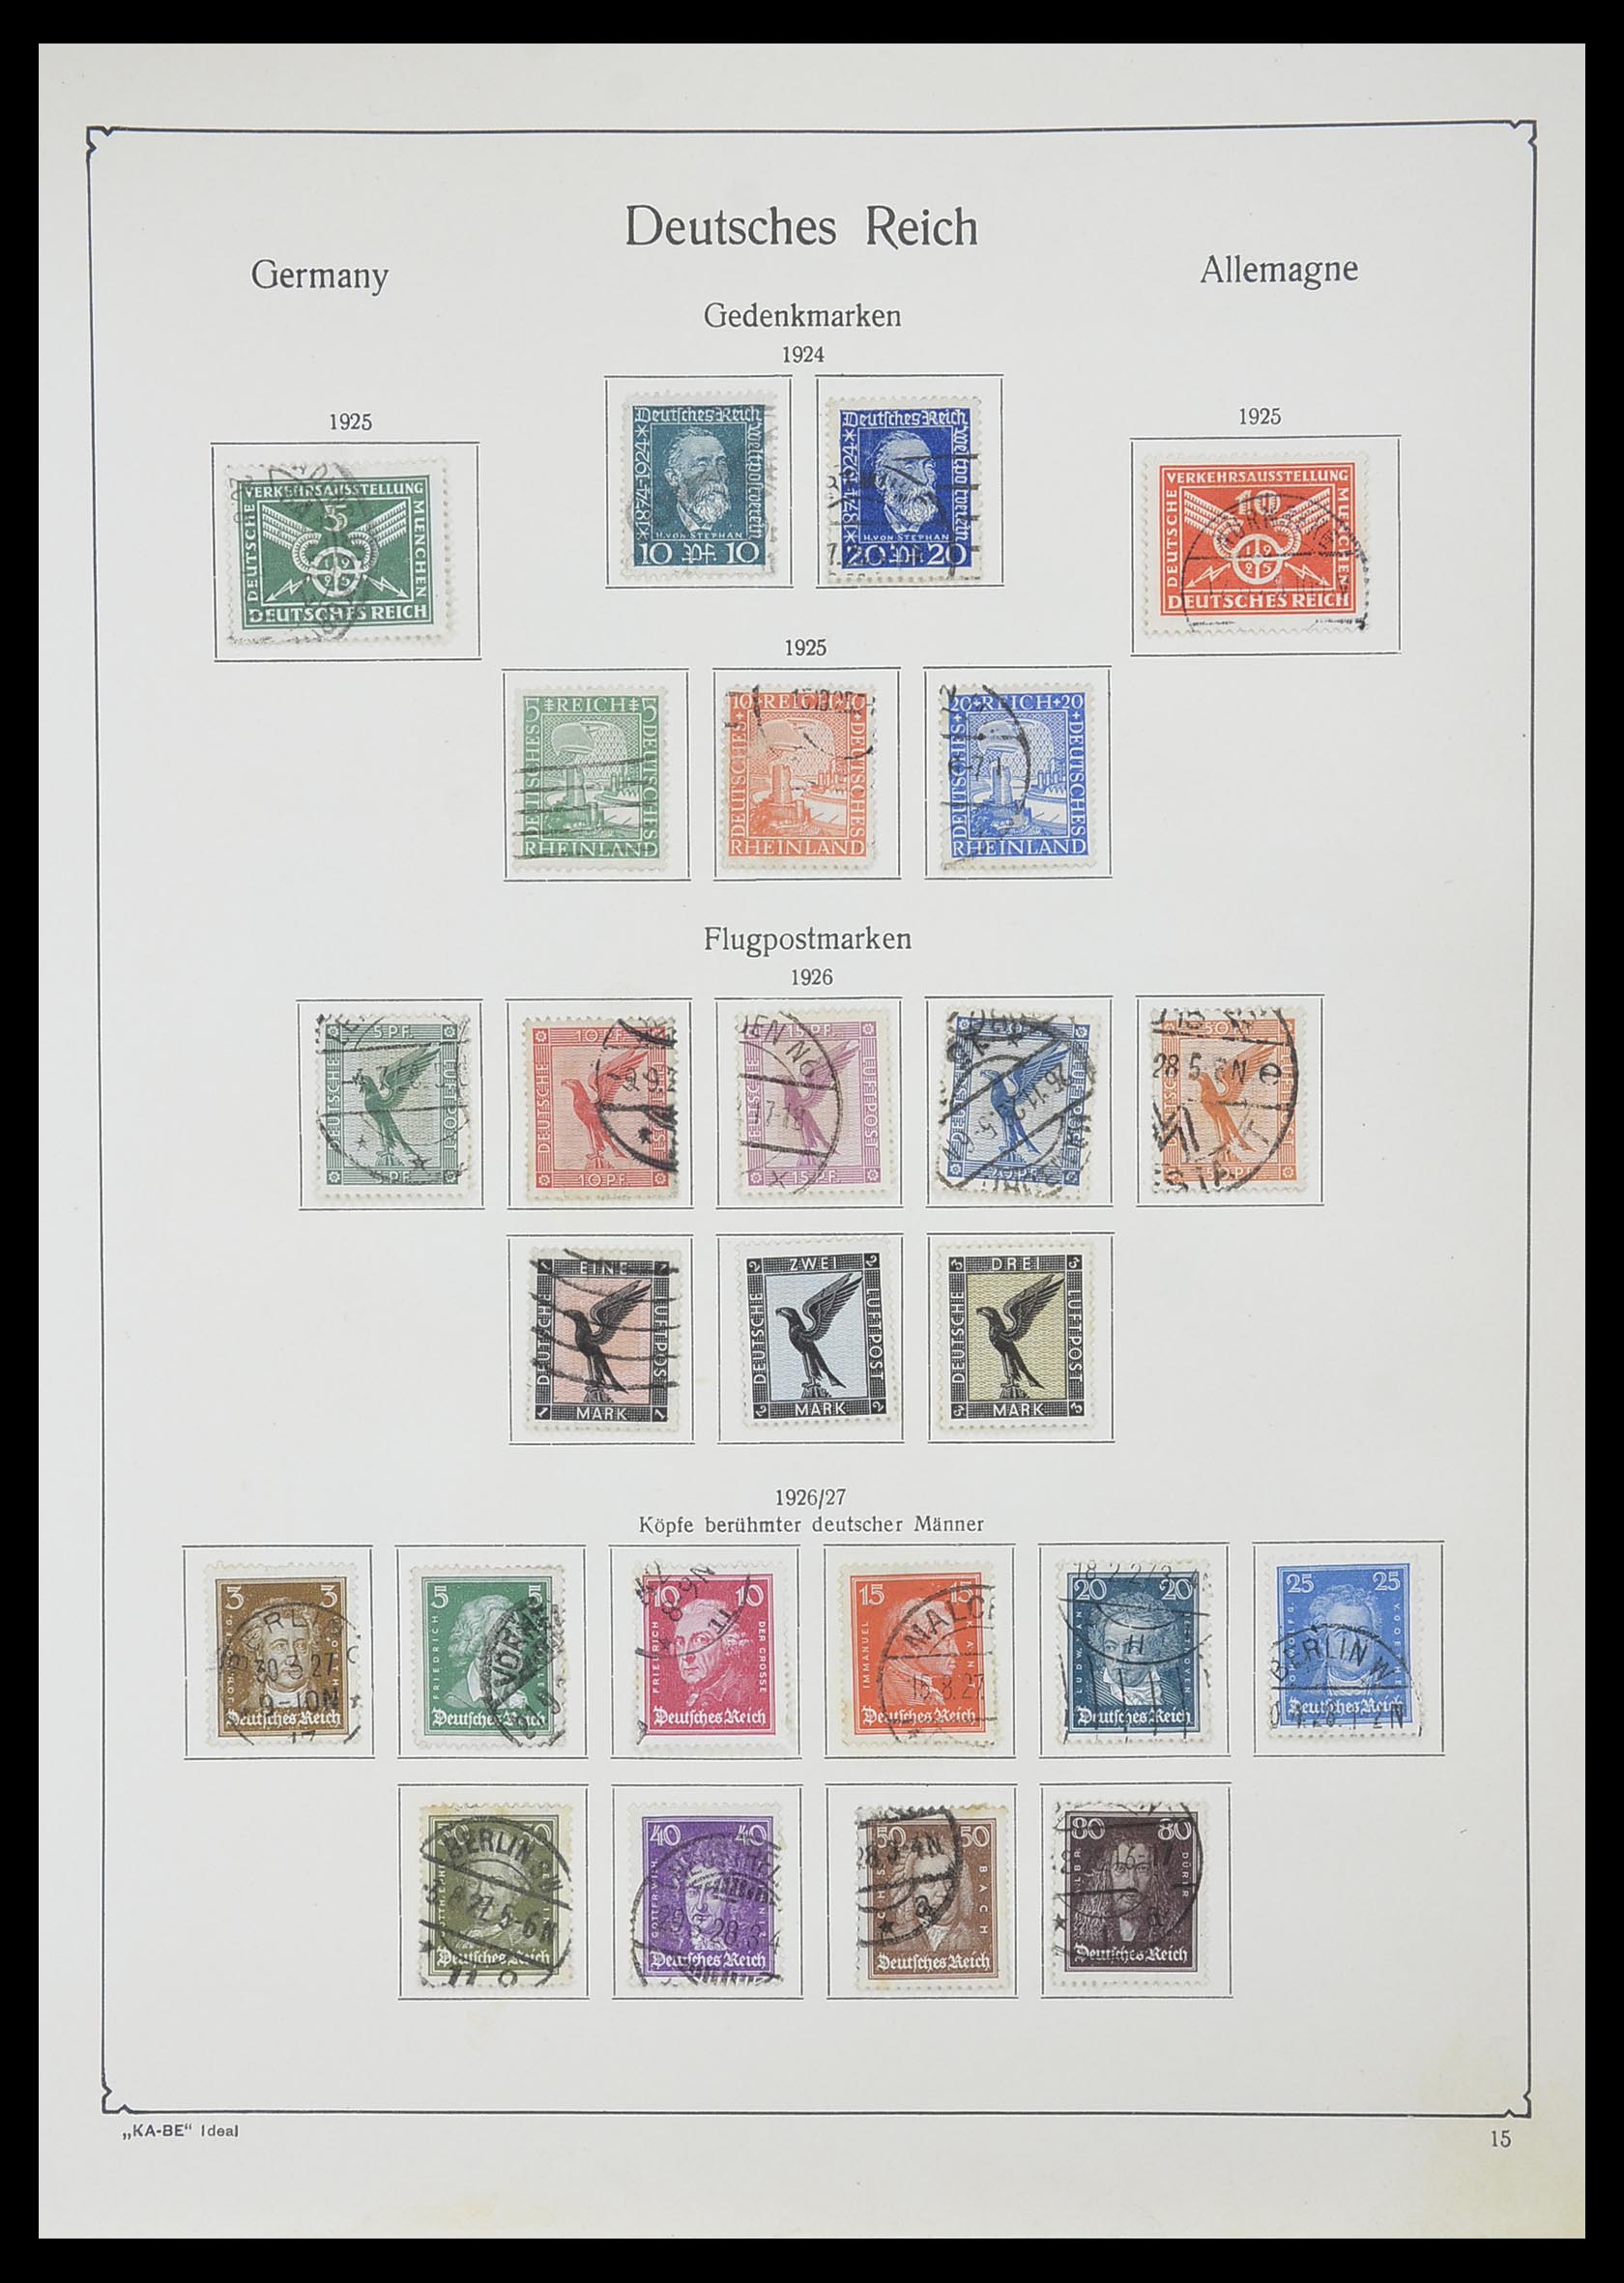 33359 020 - Stamp collection 33359 German Reich 1872-1945.